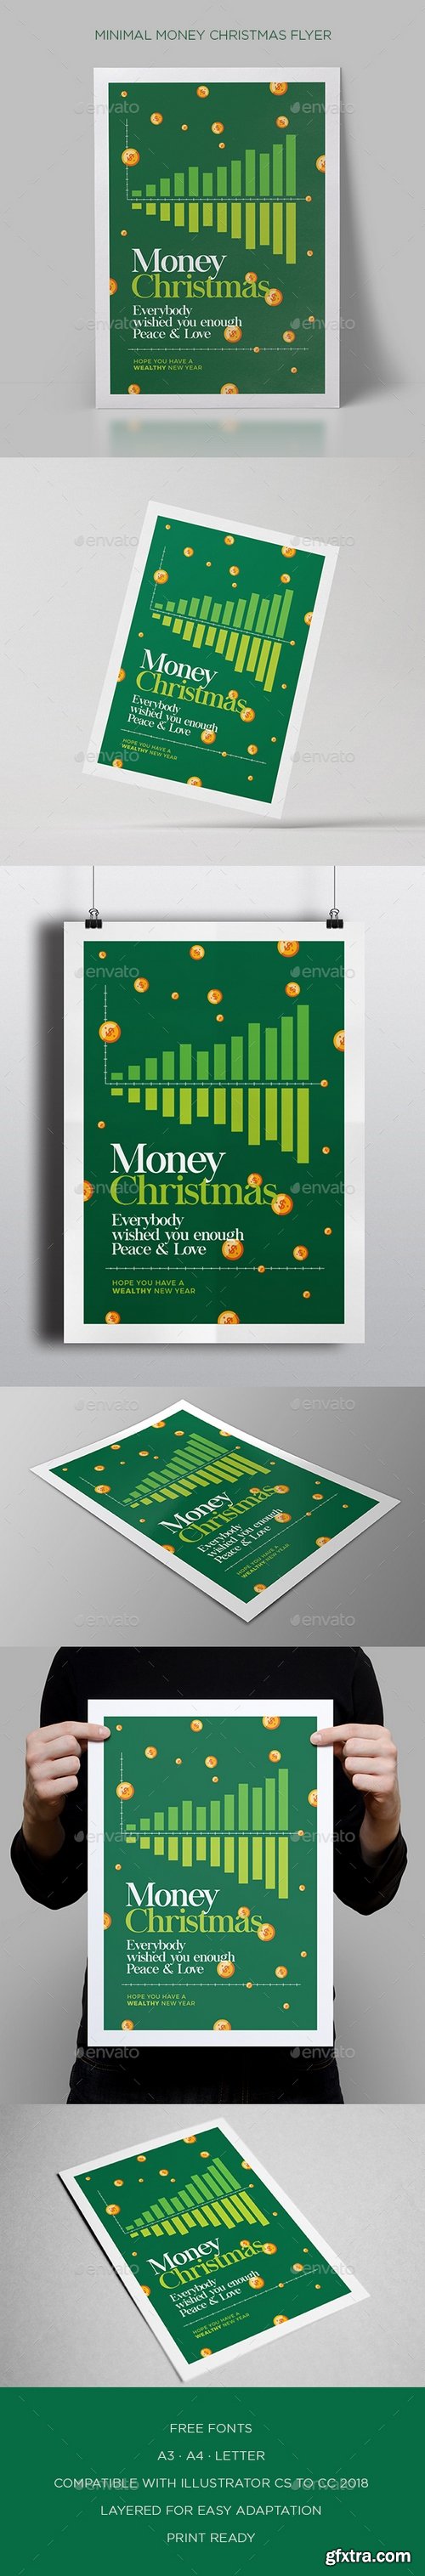 Graphicriver - Minimal Money Christmas Flyer 21090080